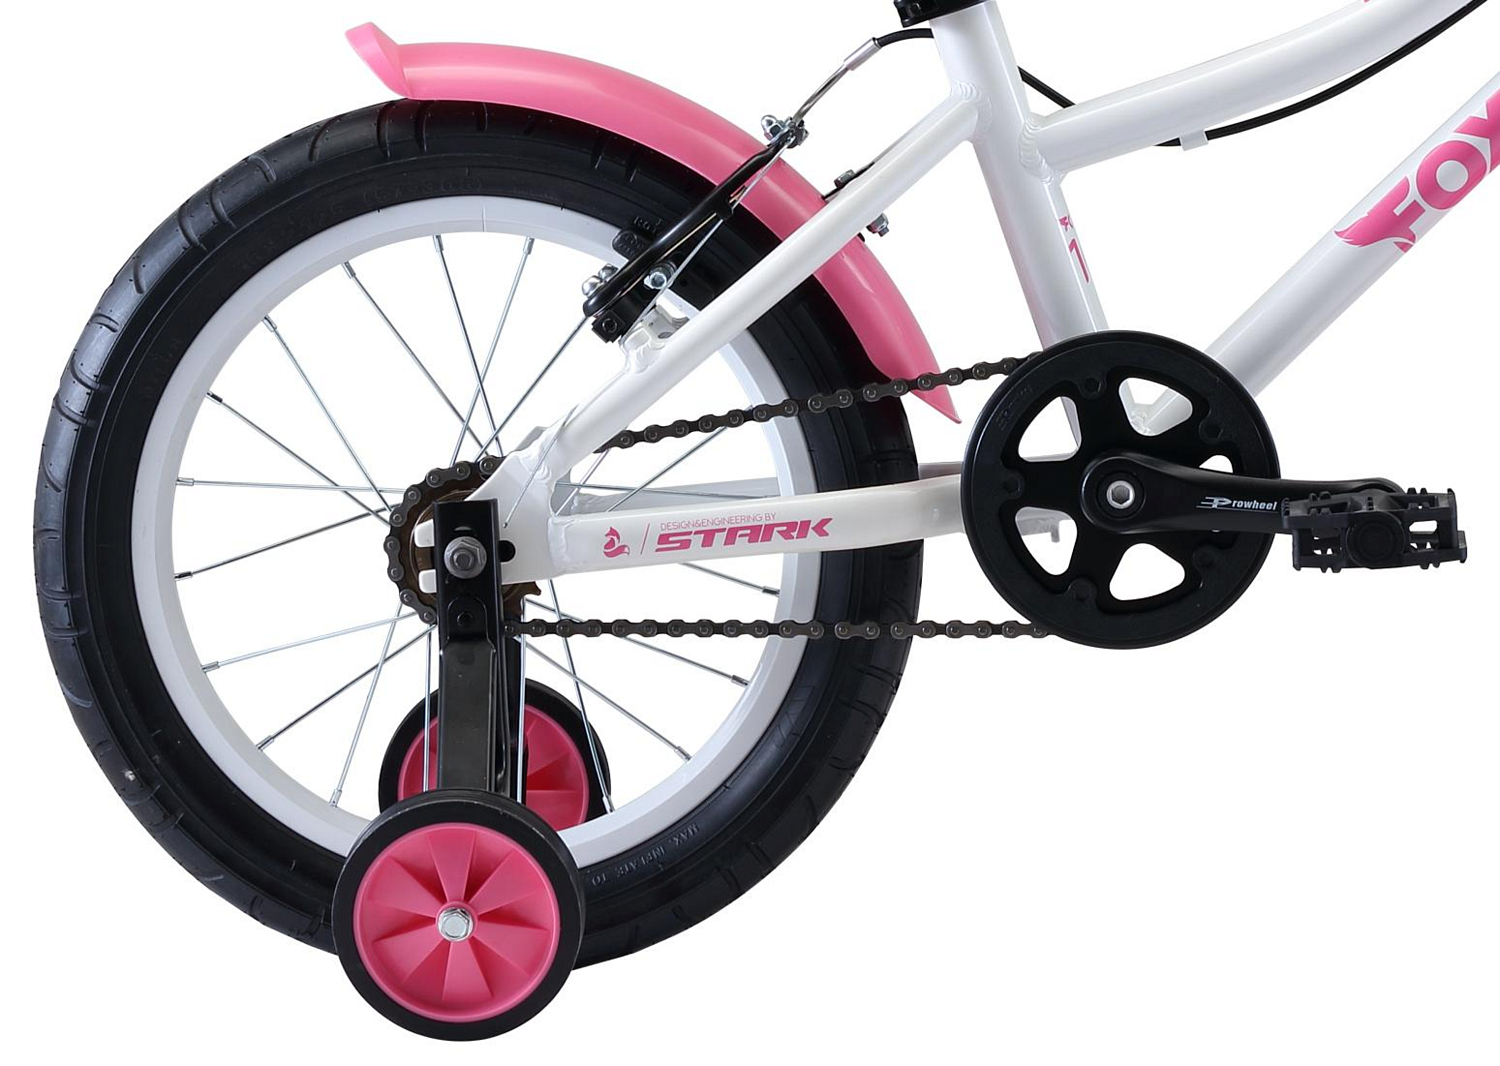 Велосипед Stark Foxy 16 2020 белый/розовый